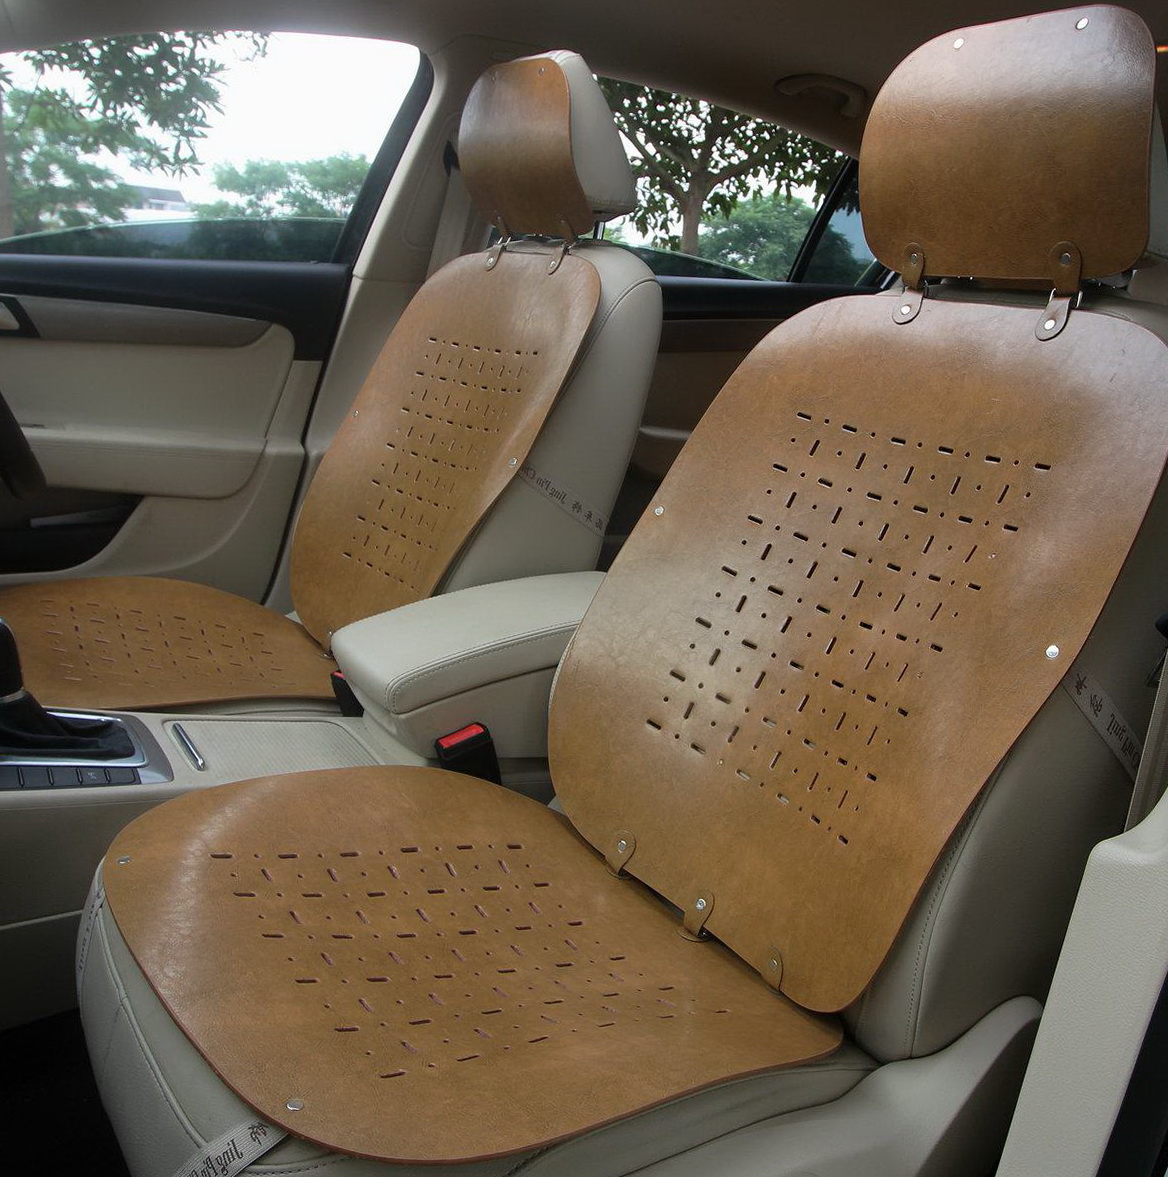 Best Car Seat Cushion Comfort | Home Design Ideas